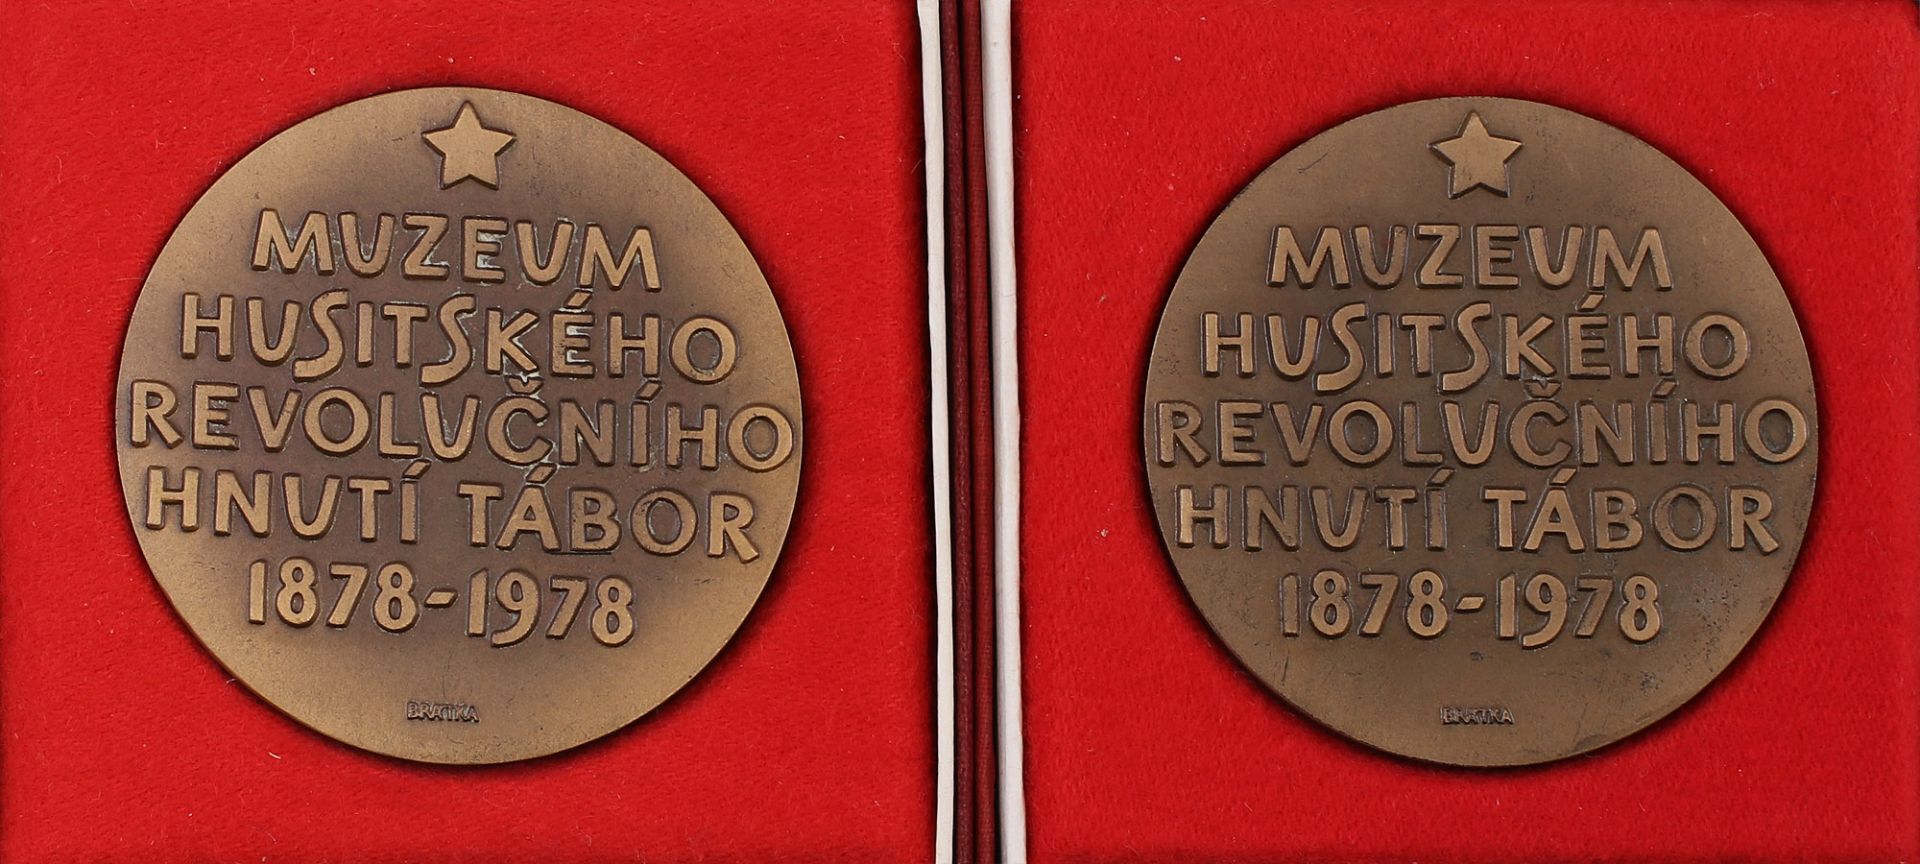 2 Bronze-Medaillen Husitské muzeum 1878-1978 im Etui - Bild 2 aus 2